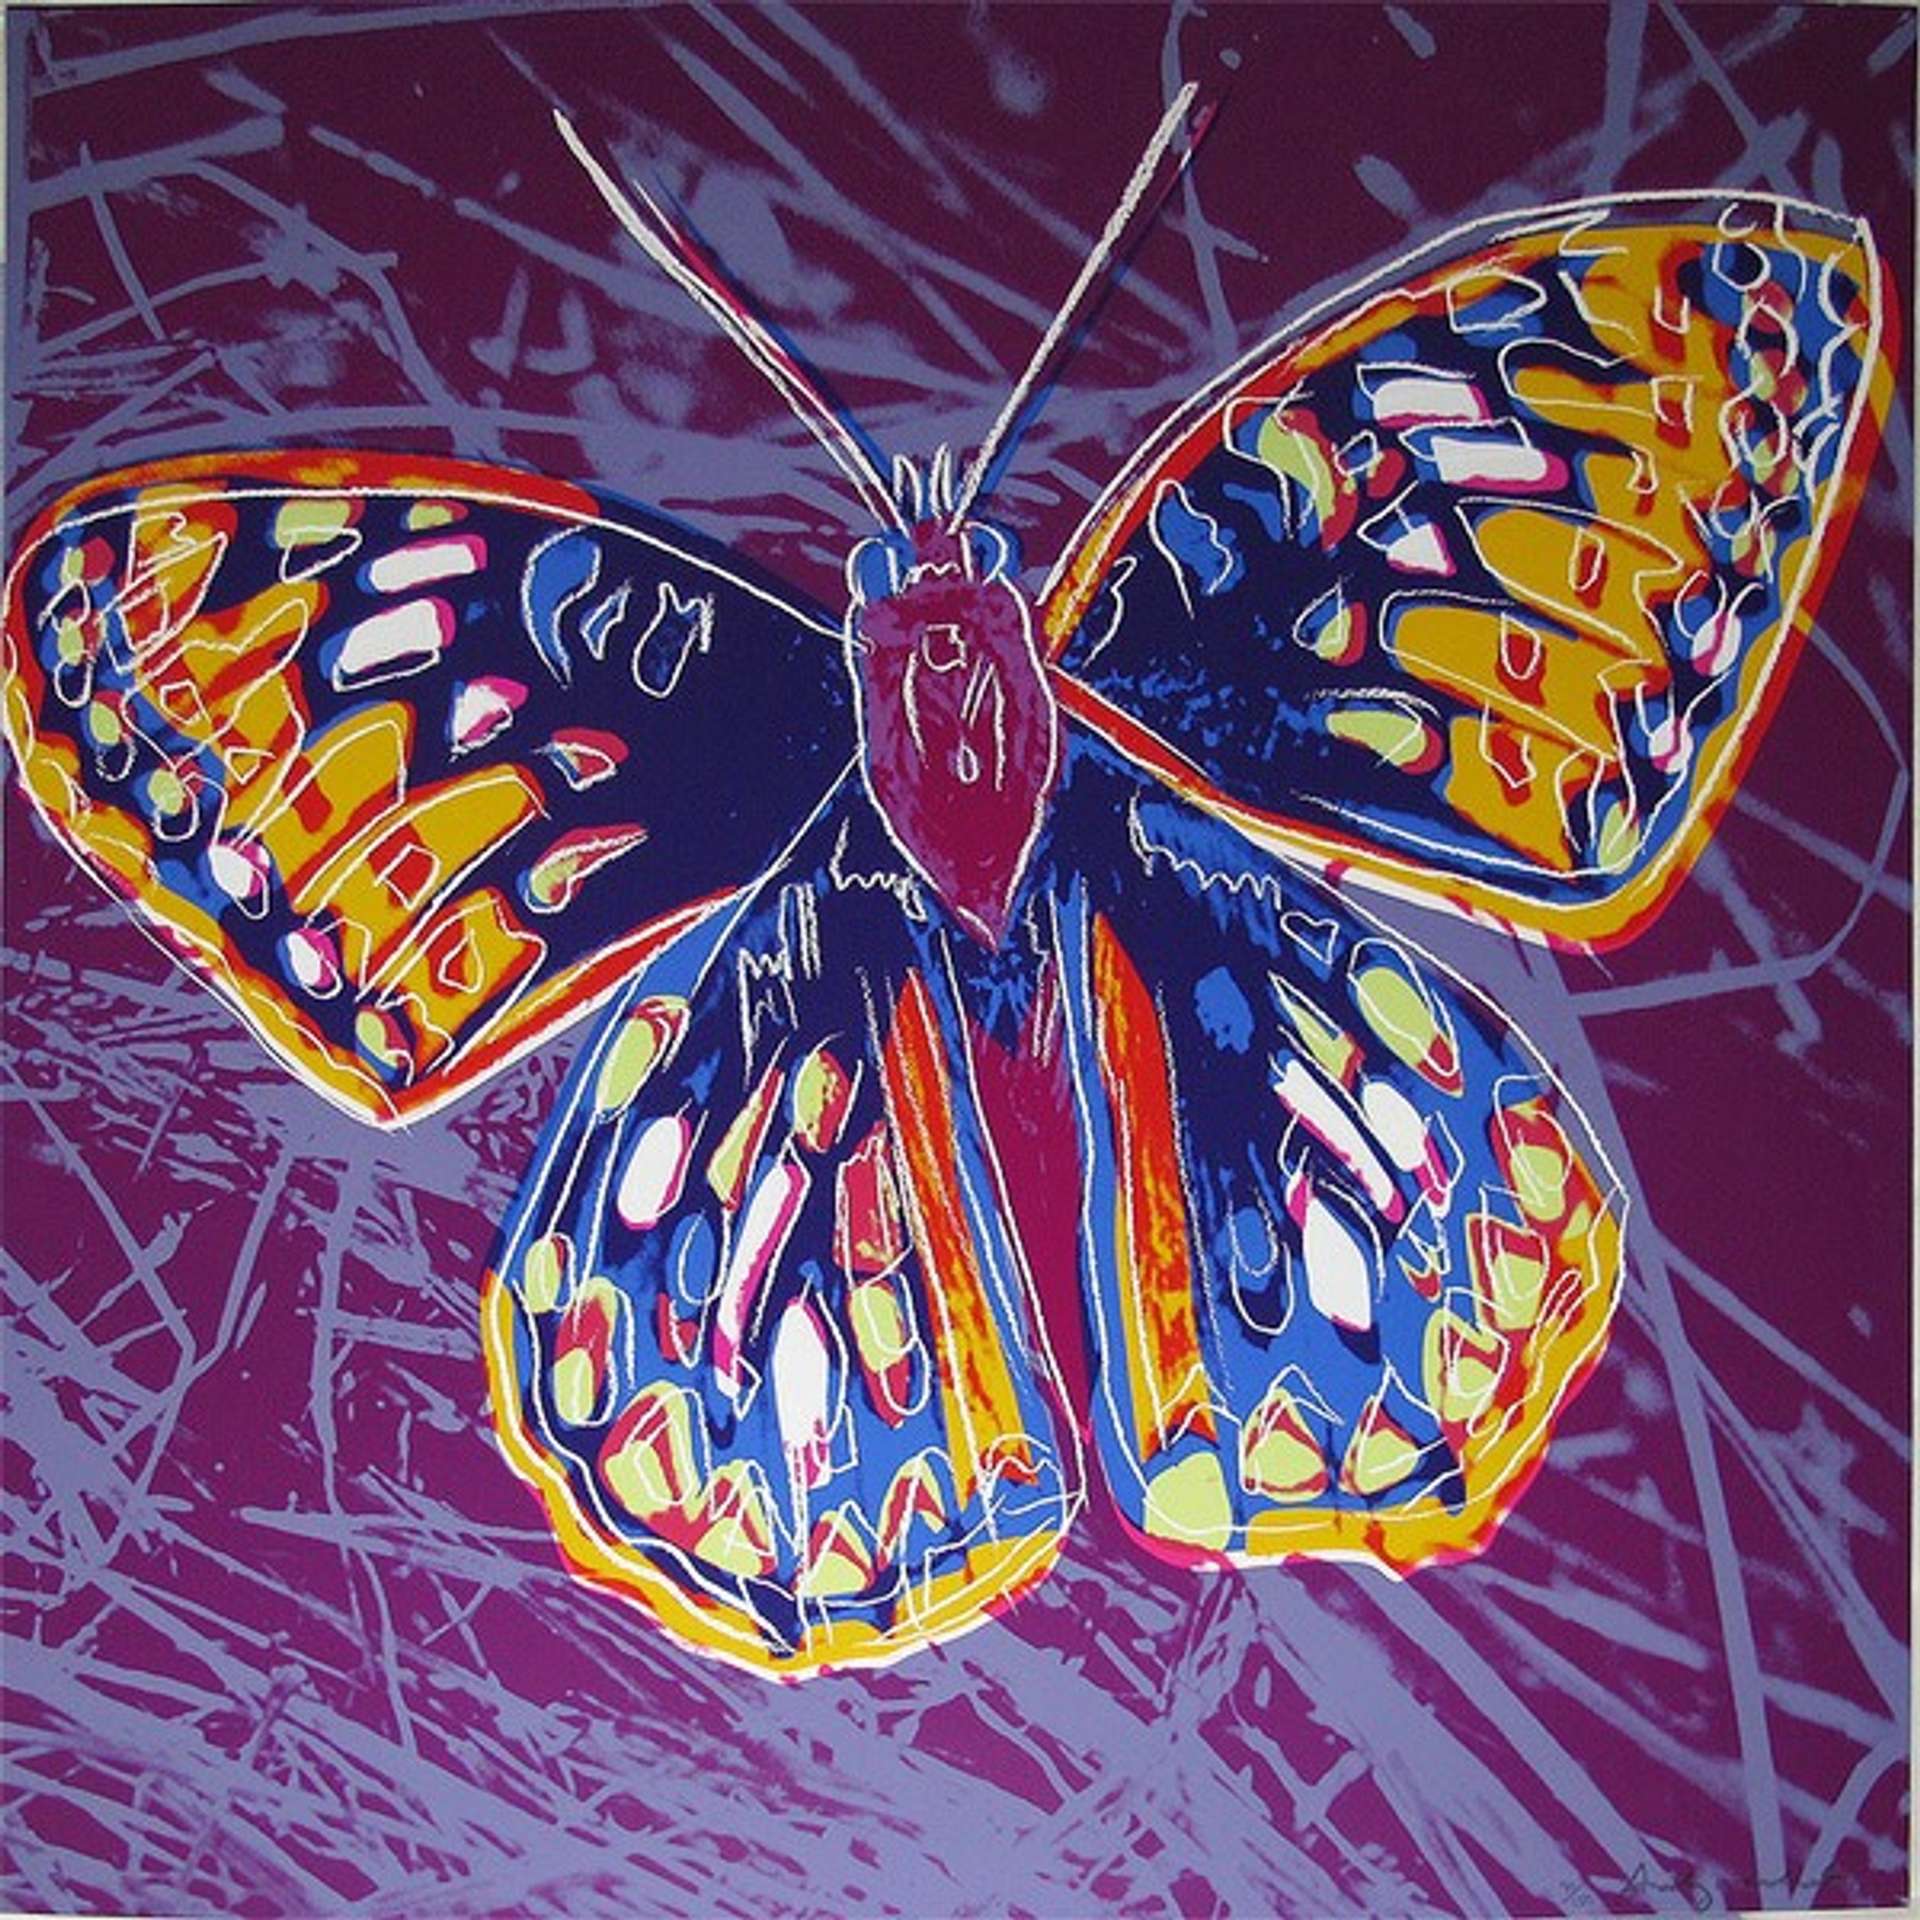 San Francisco Silverspot Butterfly (F. & S. II 298) by Andy Warhol